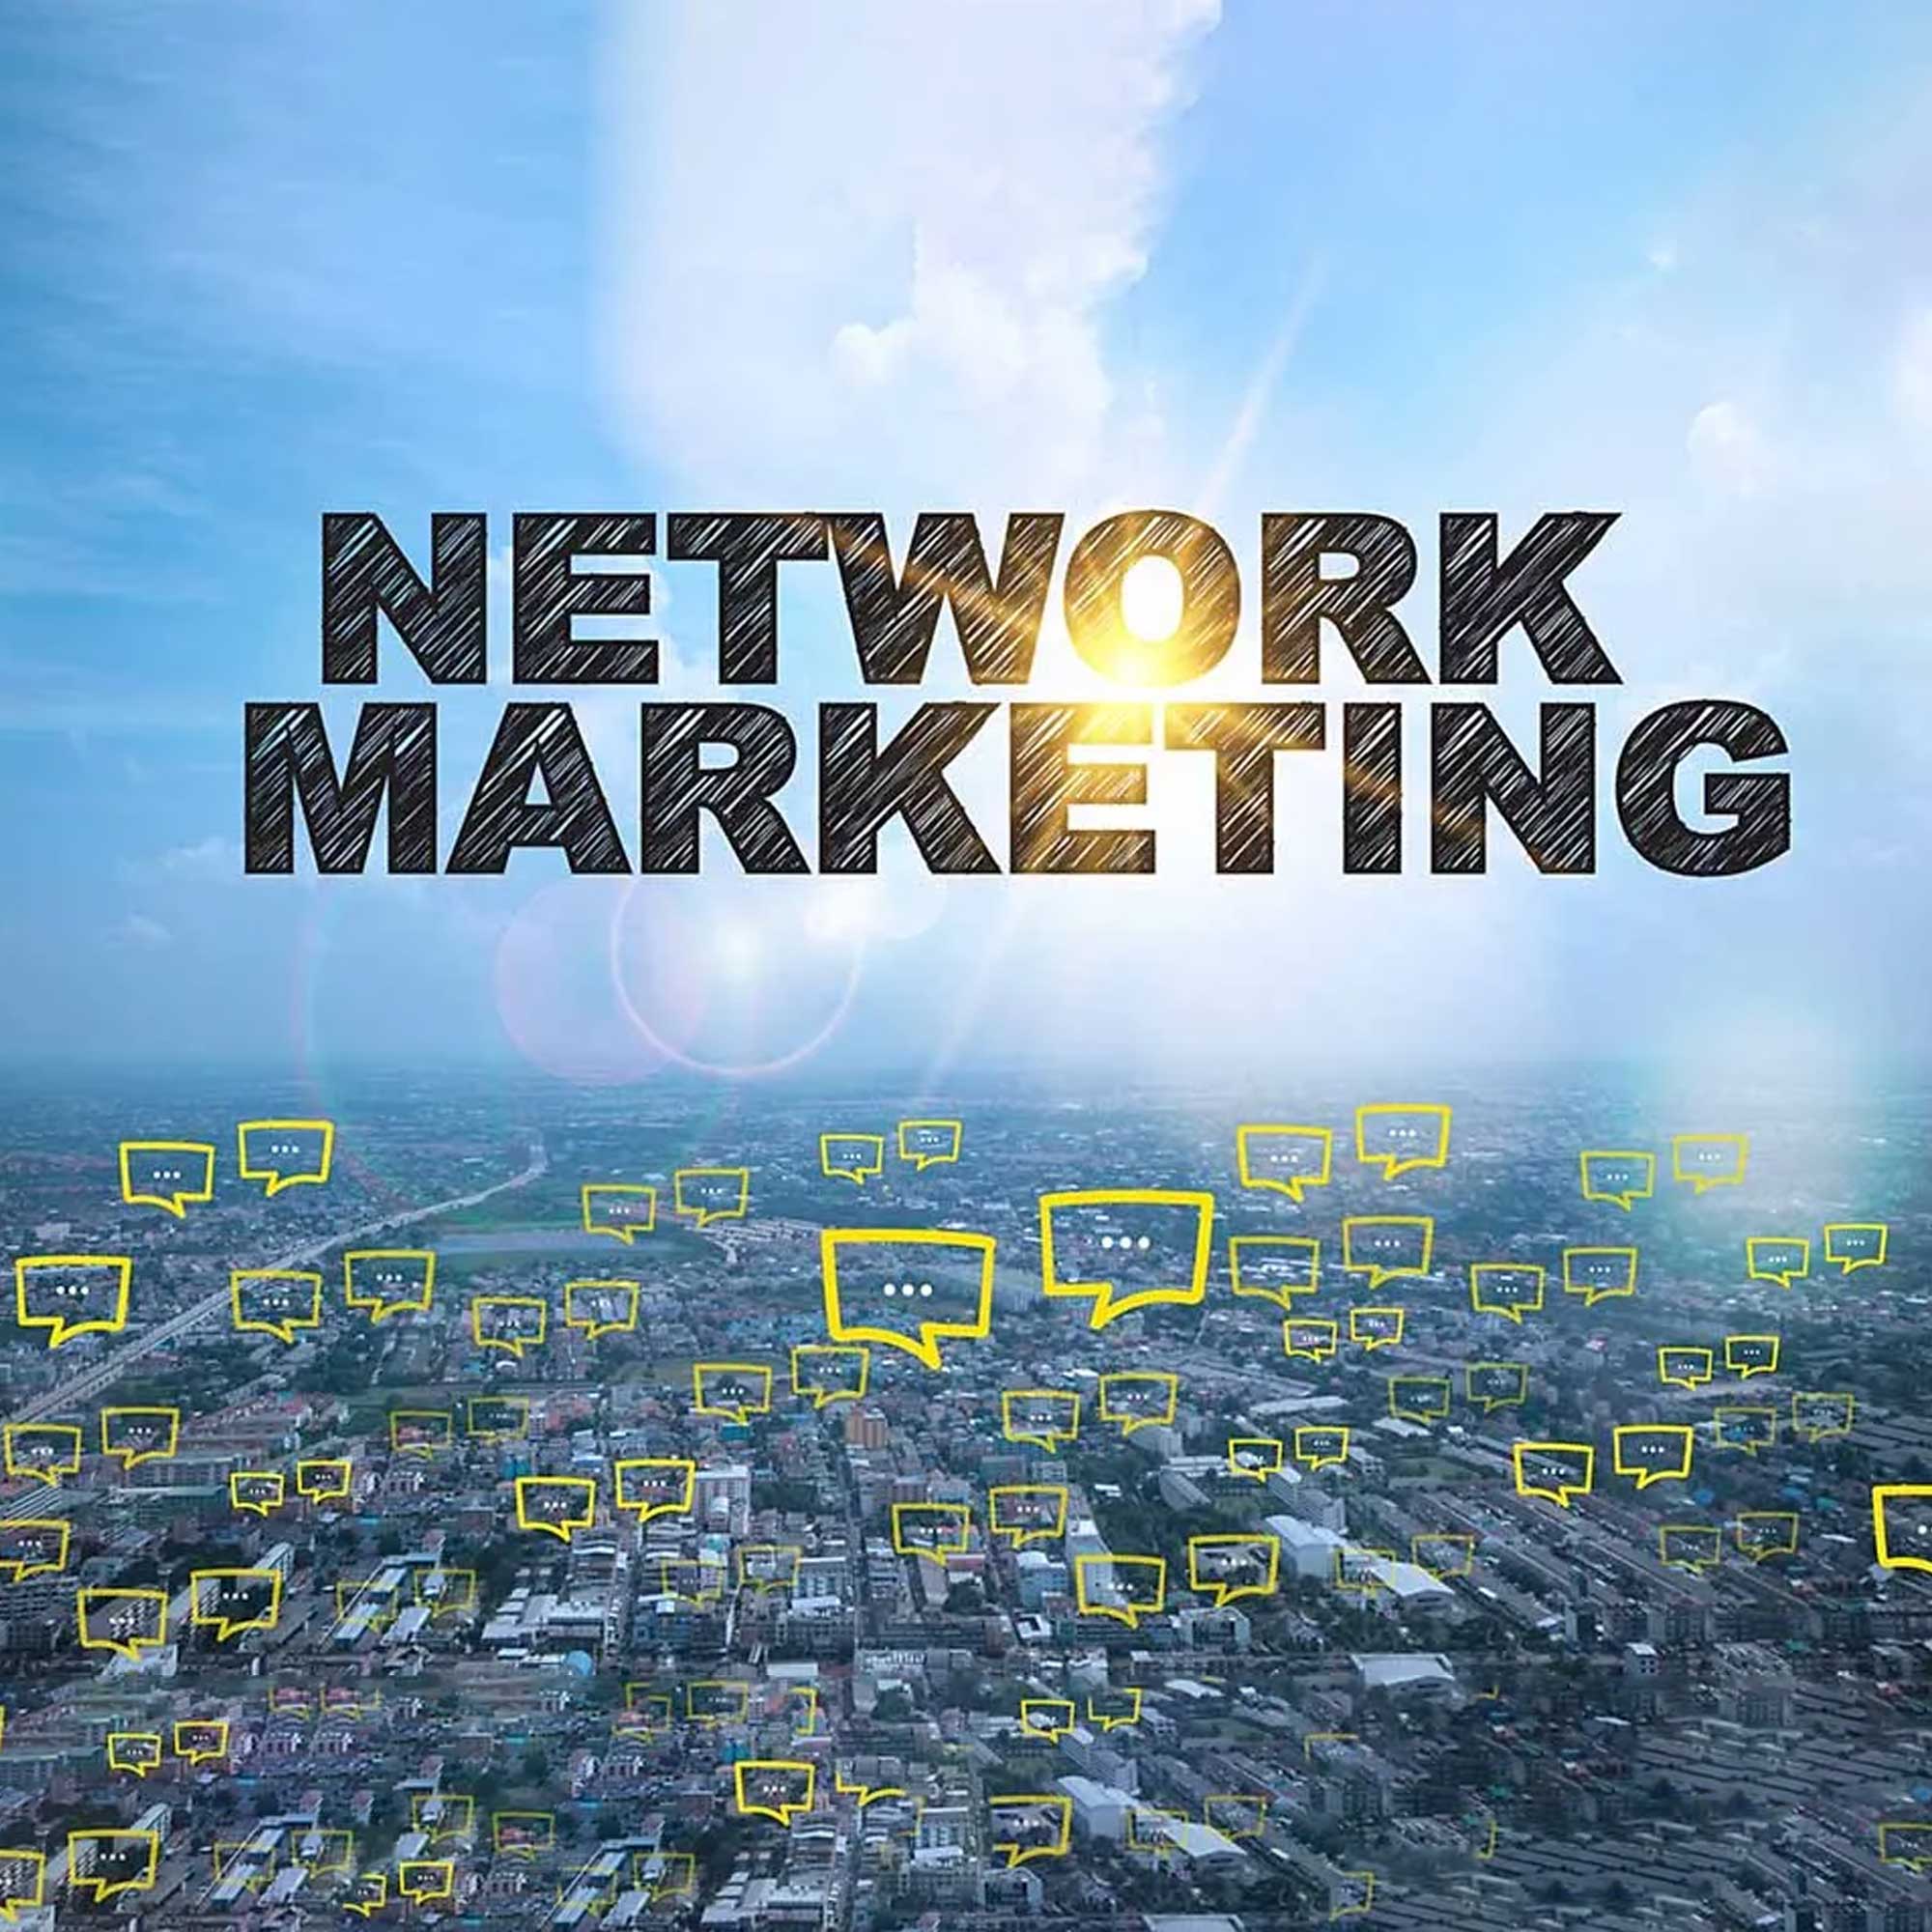 Network marketing industry